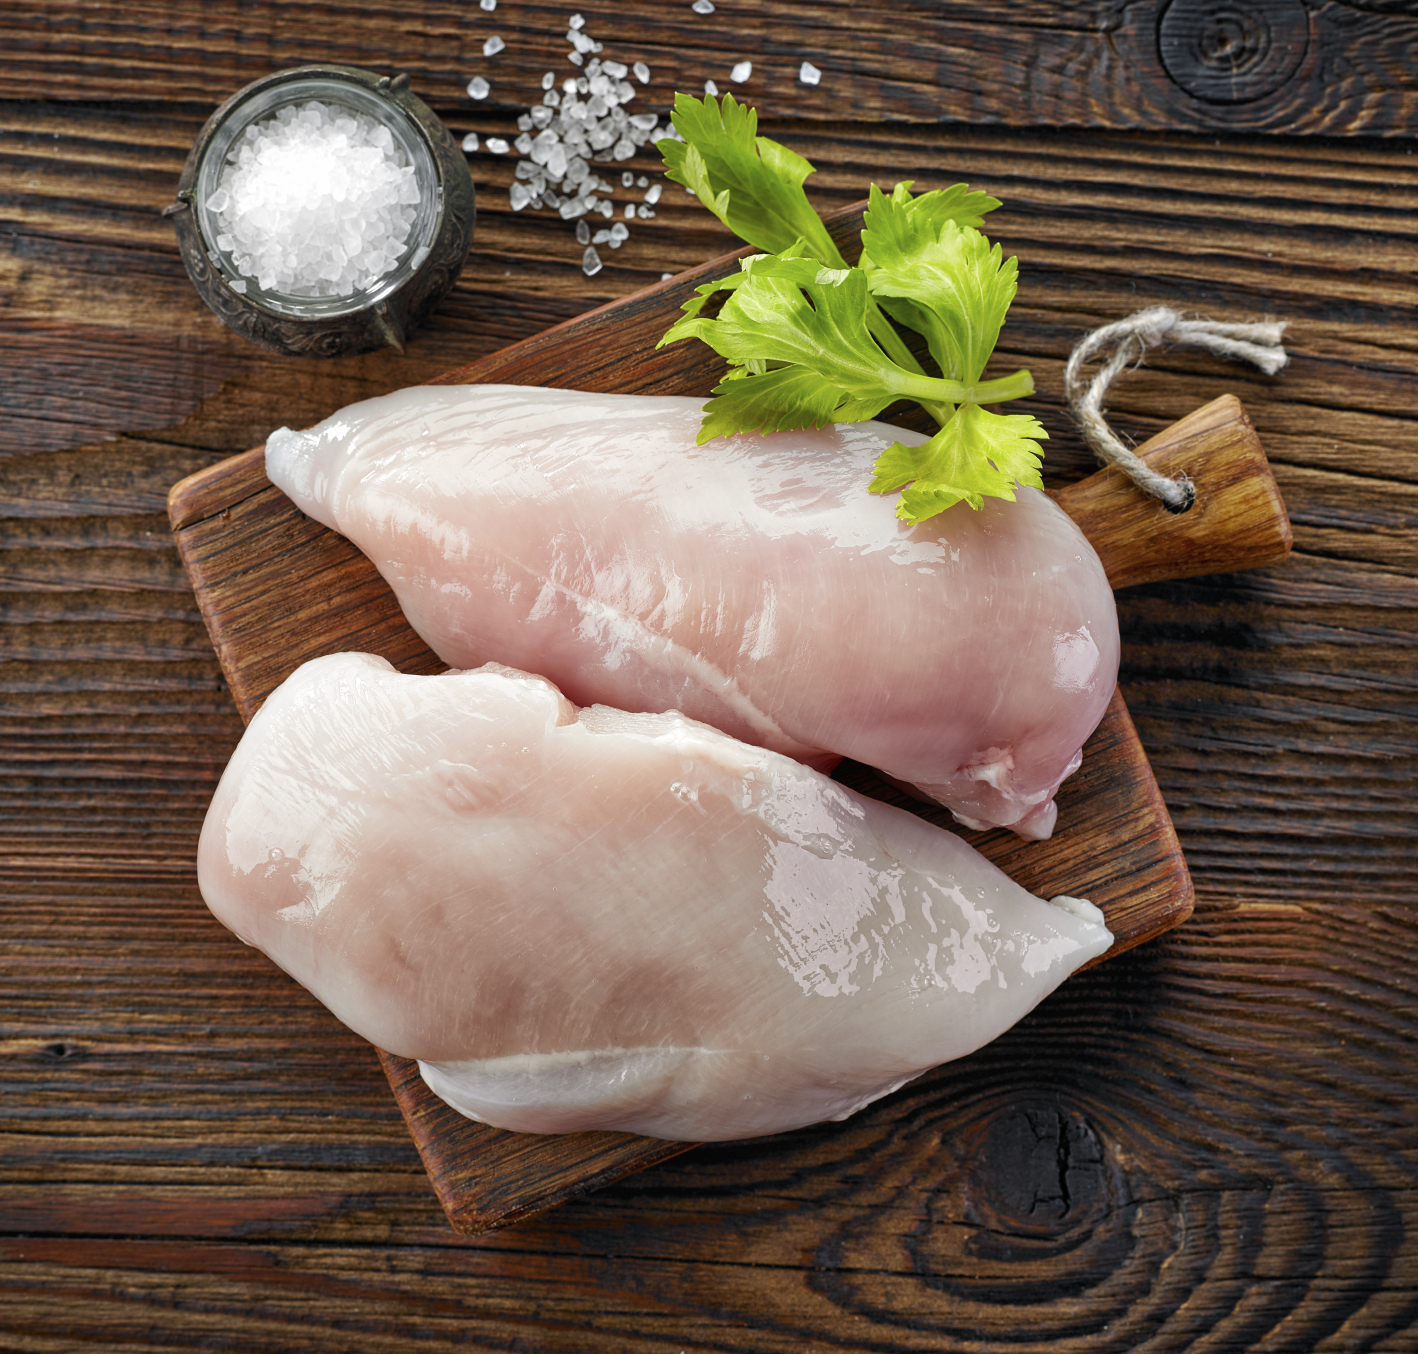 How to make chicken breast tasty